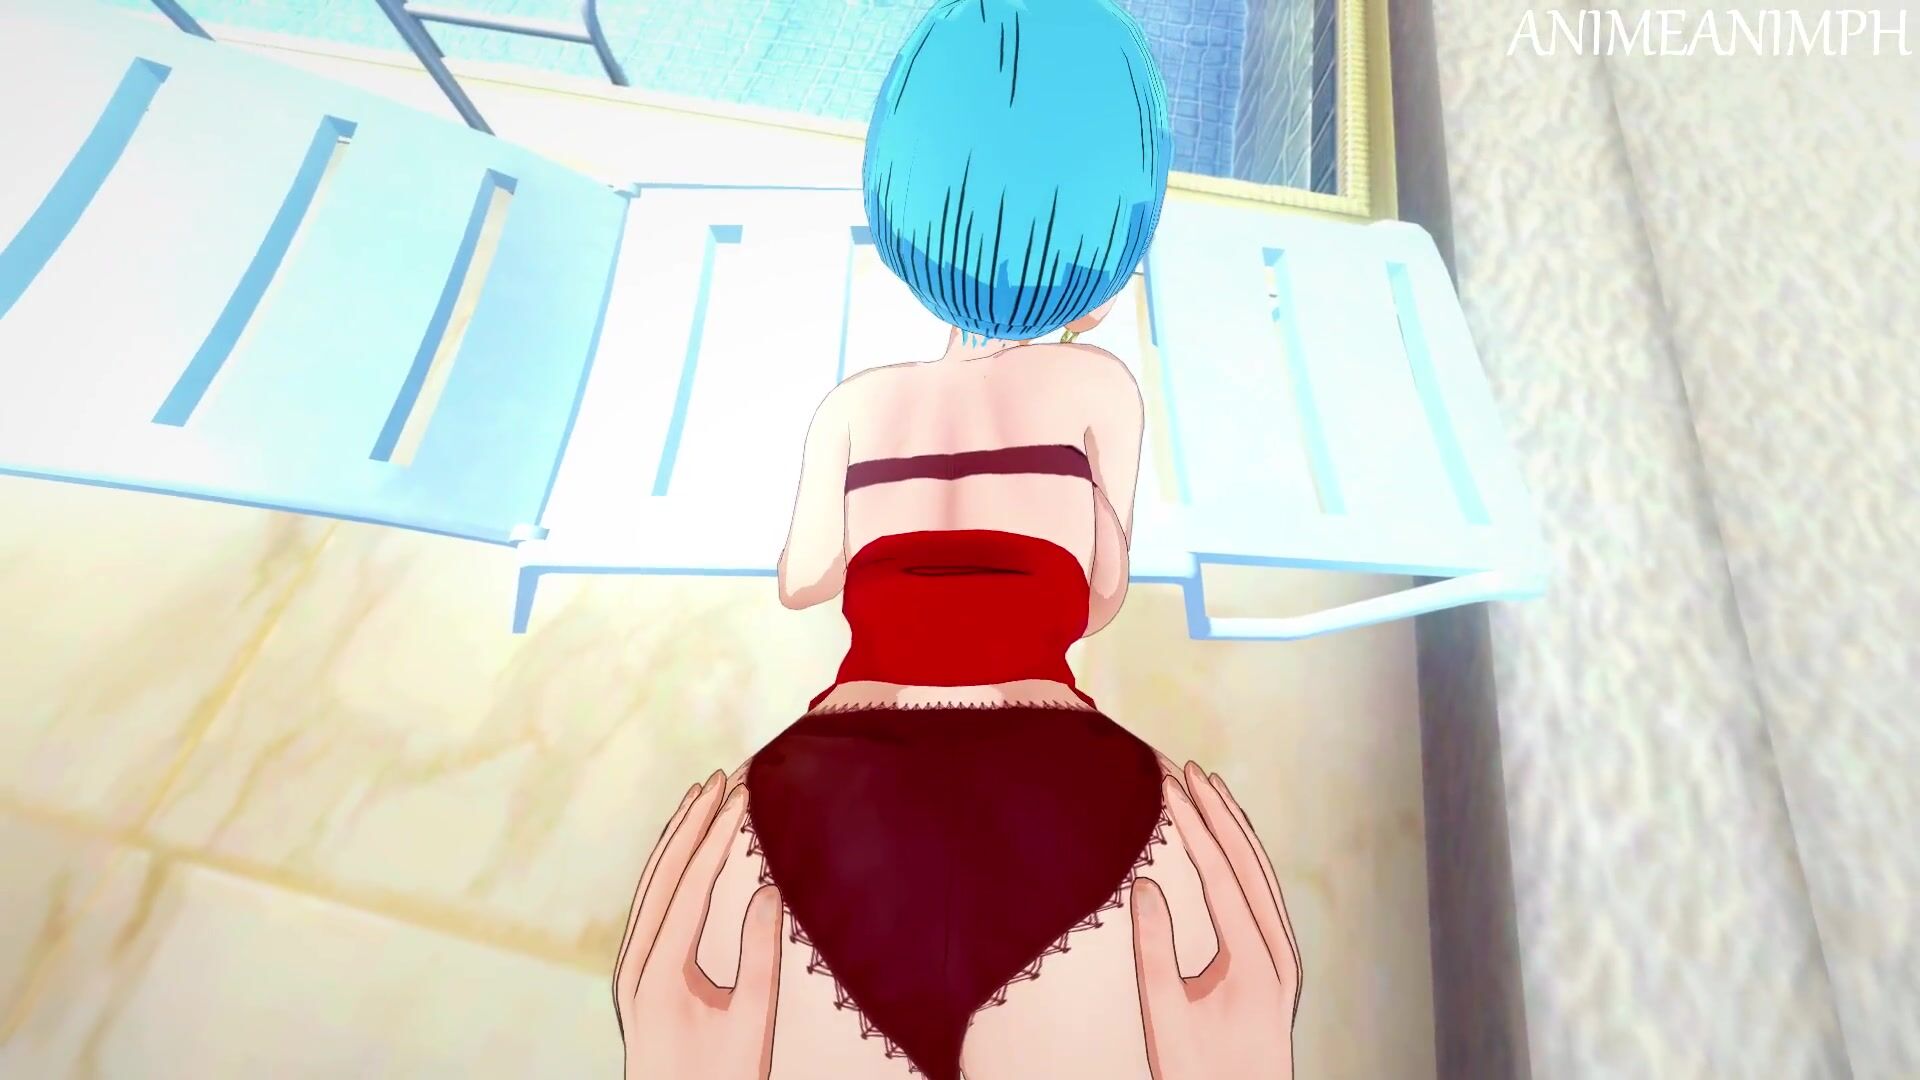 Big Tits Bulma Hentai - DRAGON BALL Z BULMA HENTAI 3D UNCENSORED watch online